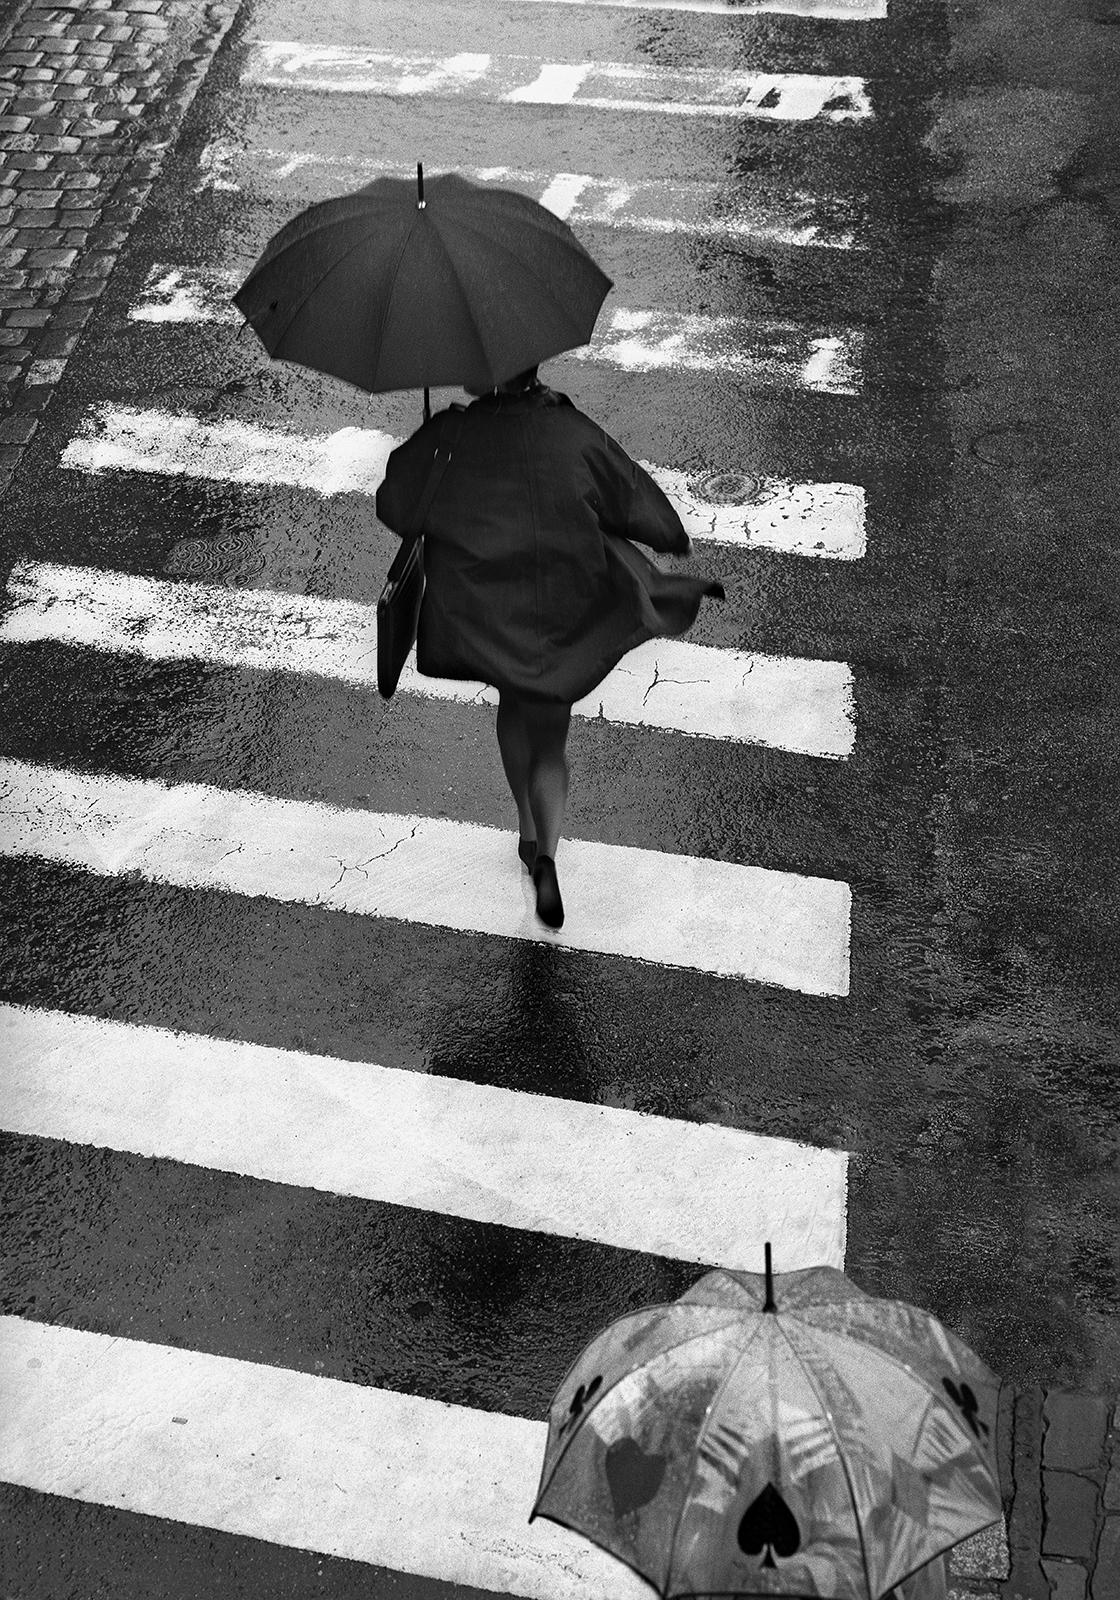 Umbrella - Signed limited edition fine art print,Black and white photo, Analog